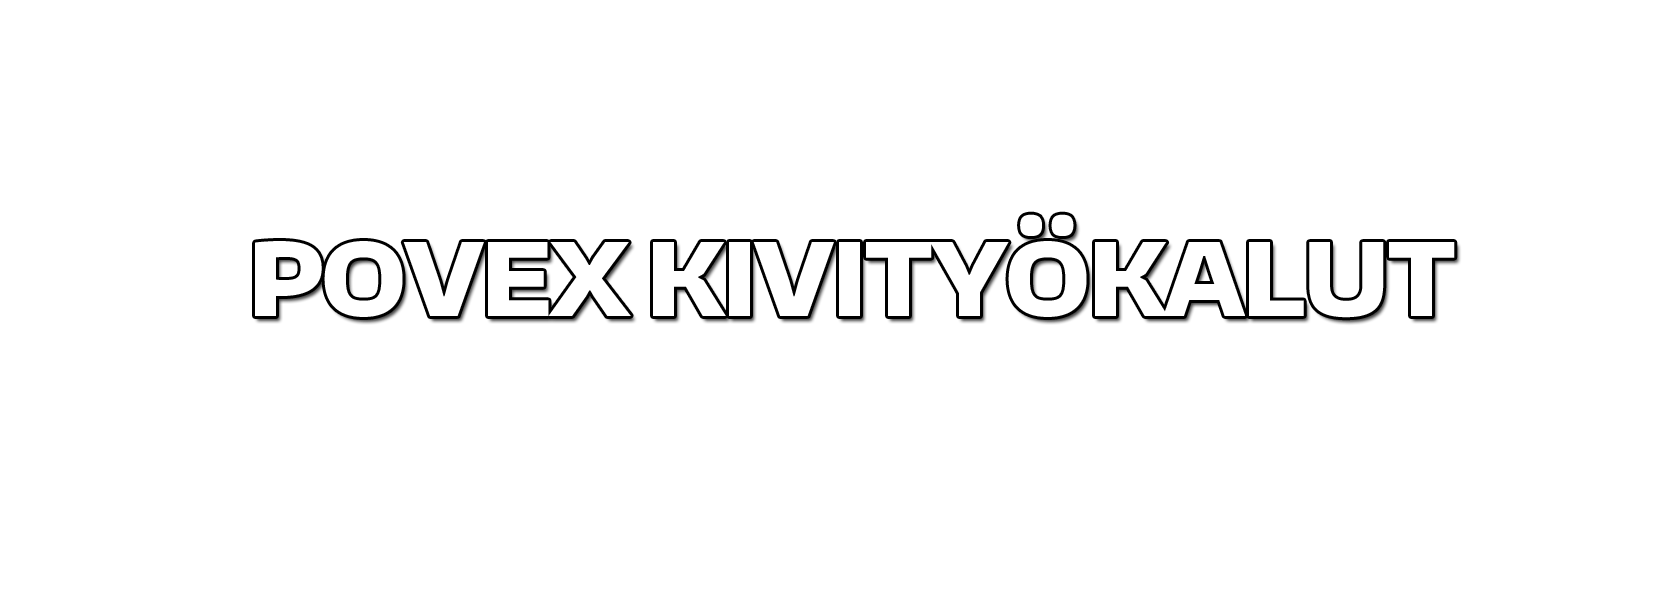 povex-kivityokalut-2016-jpg